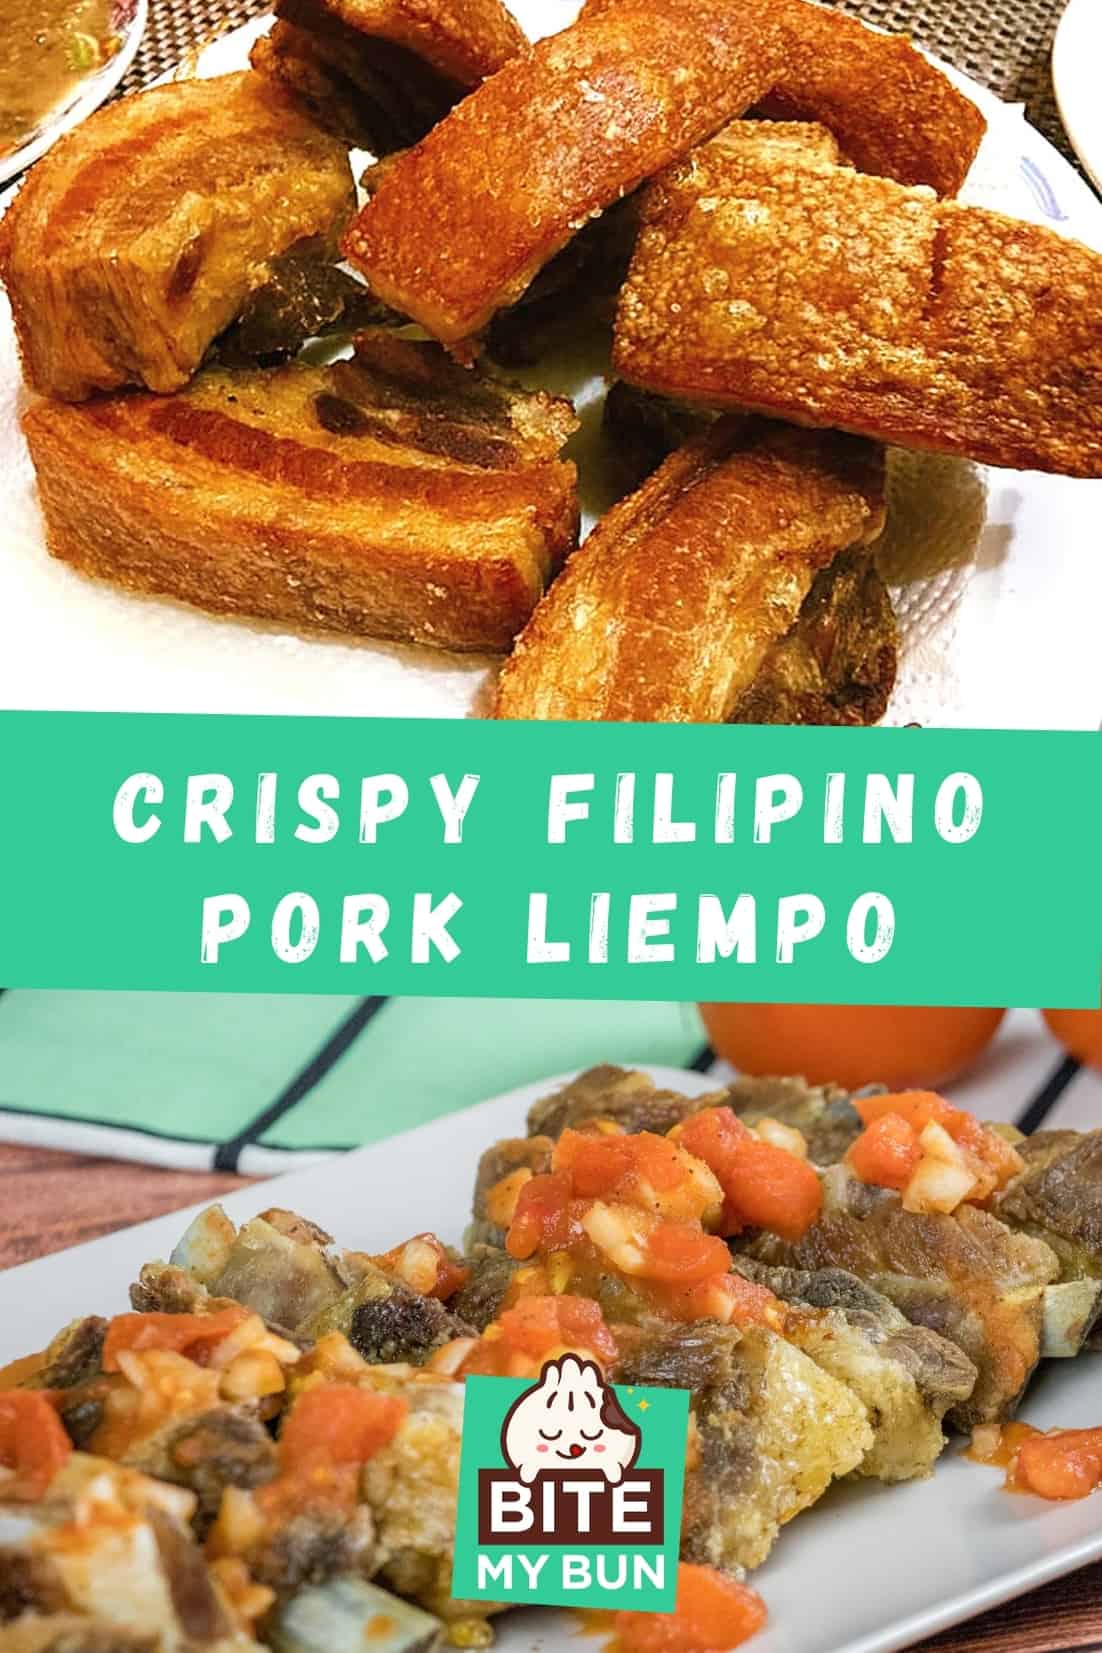 How to eat crispy filipino pork liempo bagnet